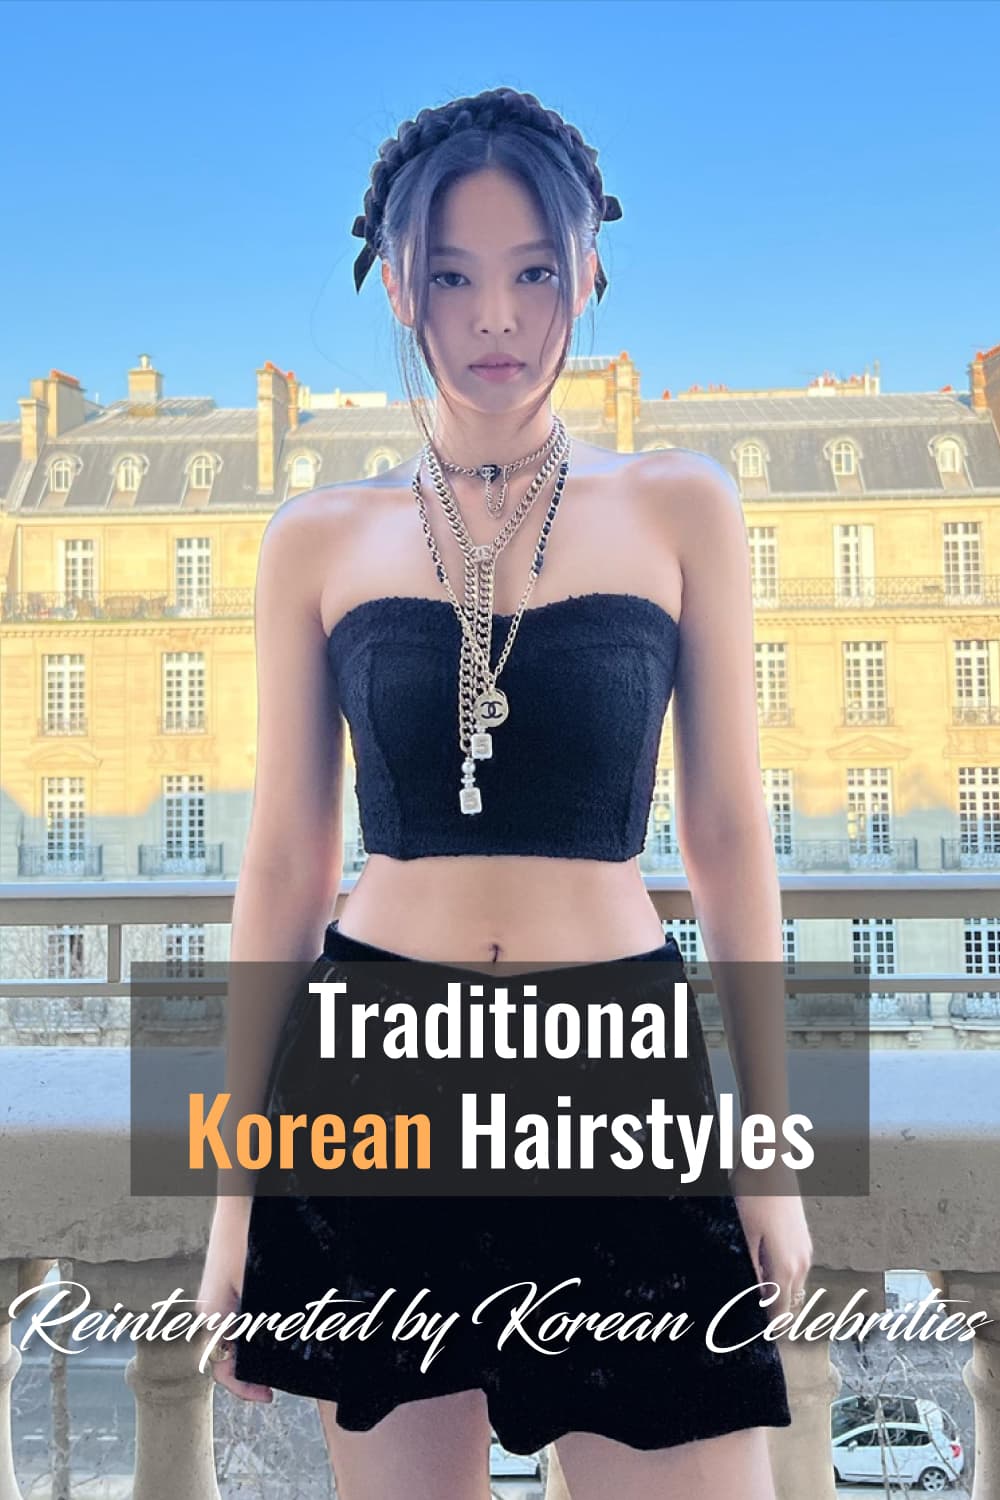 Lingua Asia Traditional Korean Hairstyles Reinterpreted by Korean Celebrities